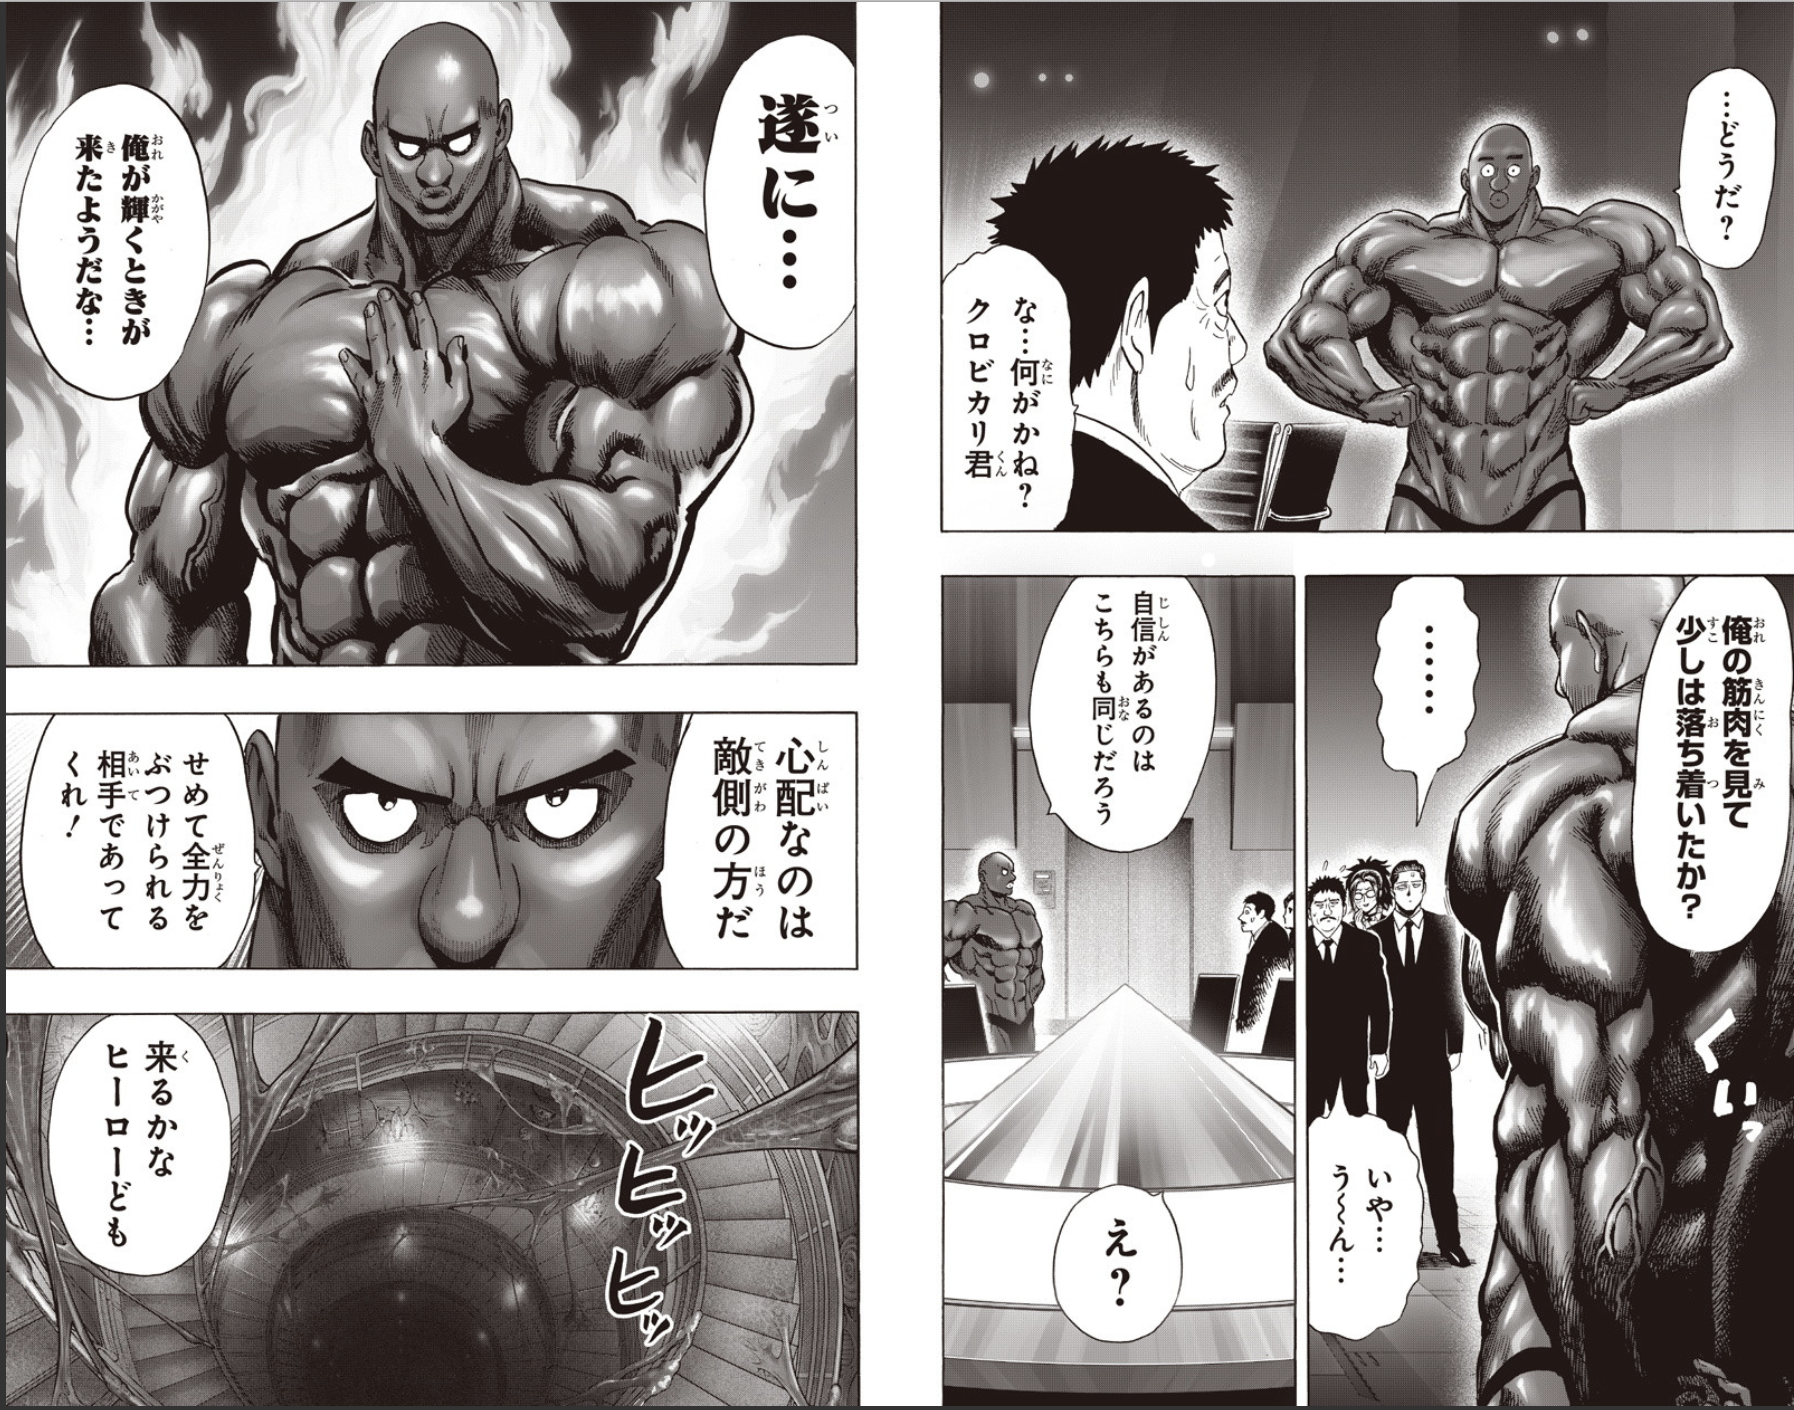 One Punch Man Episode 1 Japanese Jump Manga